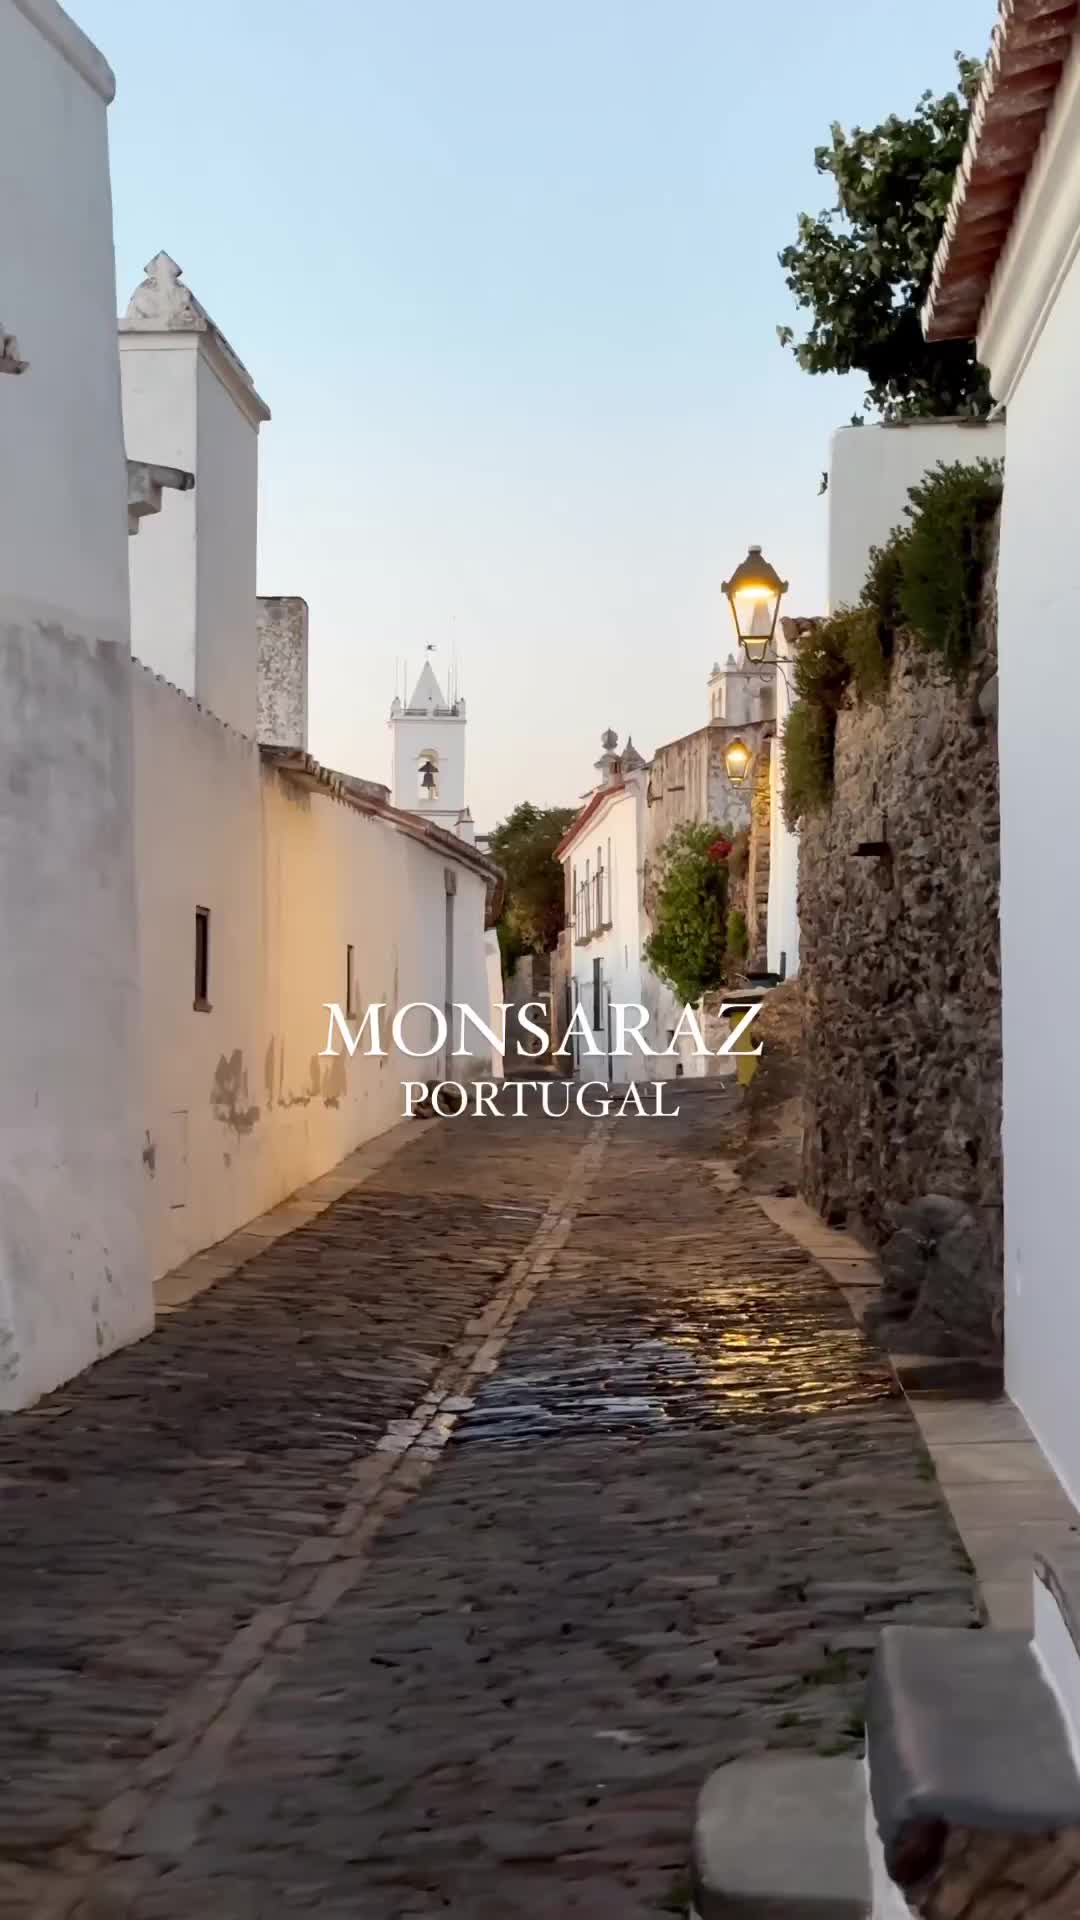 Monsaraz: Explore Portugal's Timeless Alentejo Village